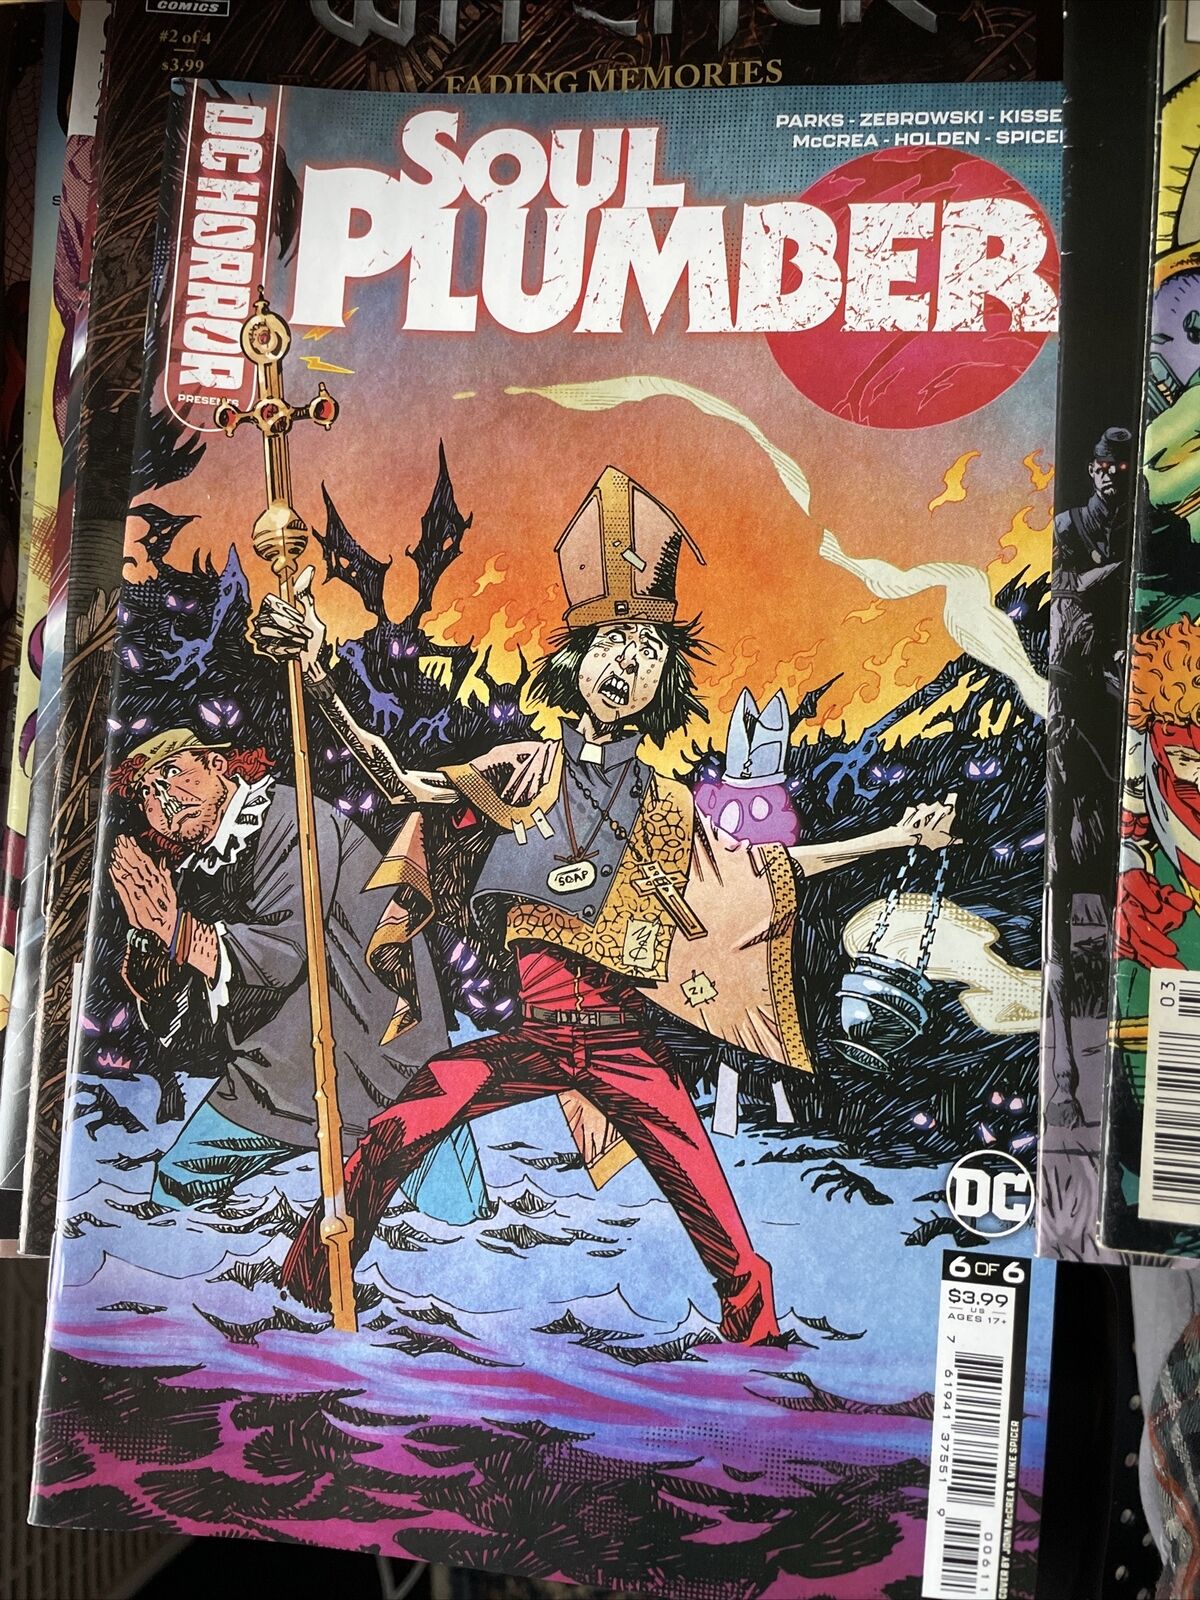 DC Horror Presents: Soul Plumber #6 (DC Comics, May 2022)